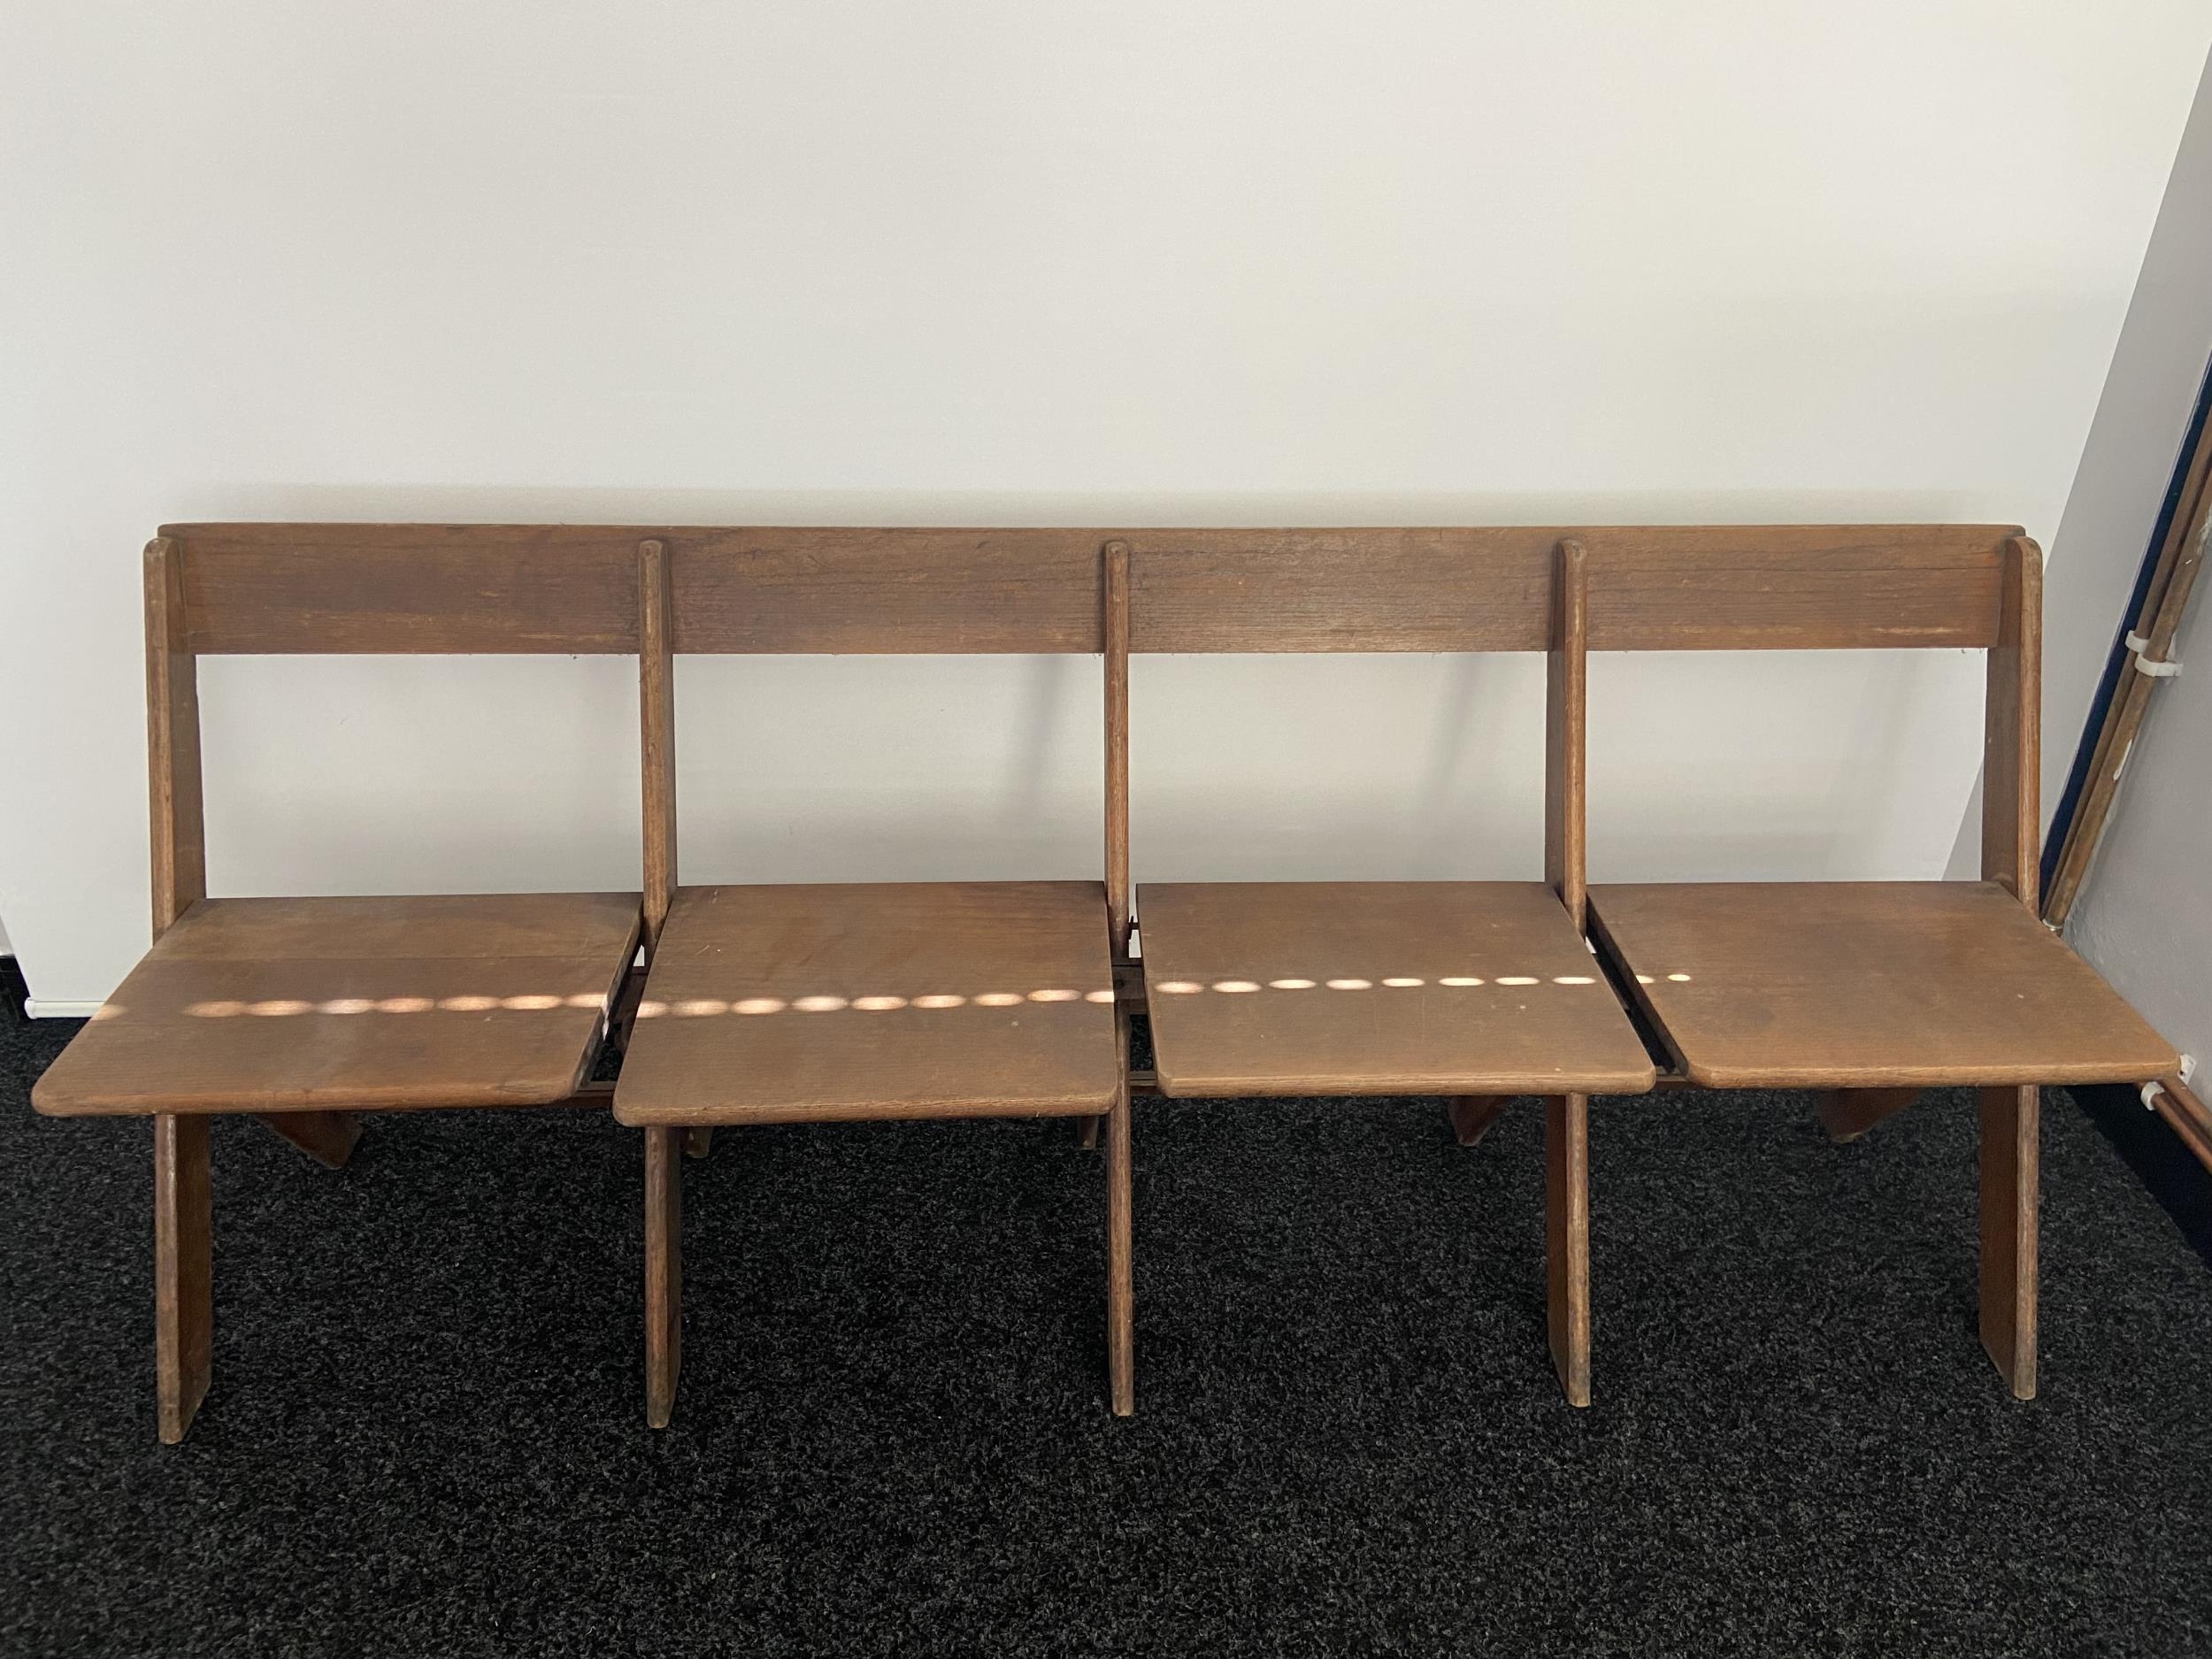 James D. Bennet Ltd. Glasgow, A four folding chair bench. [76x186x46cm]